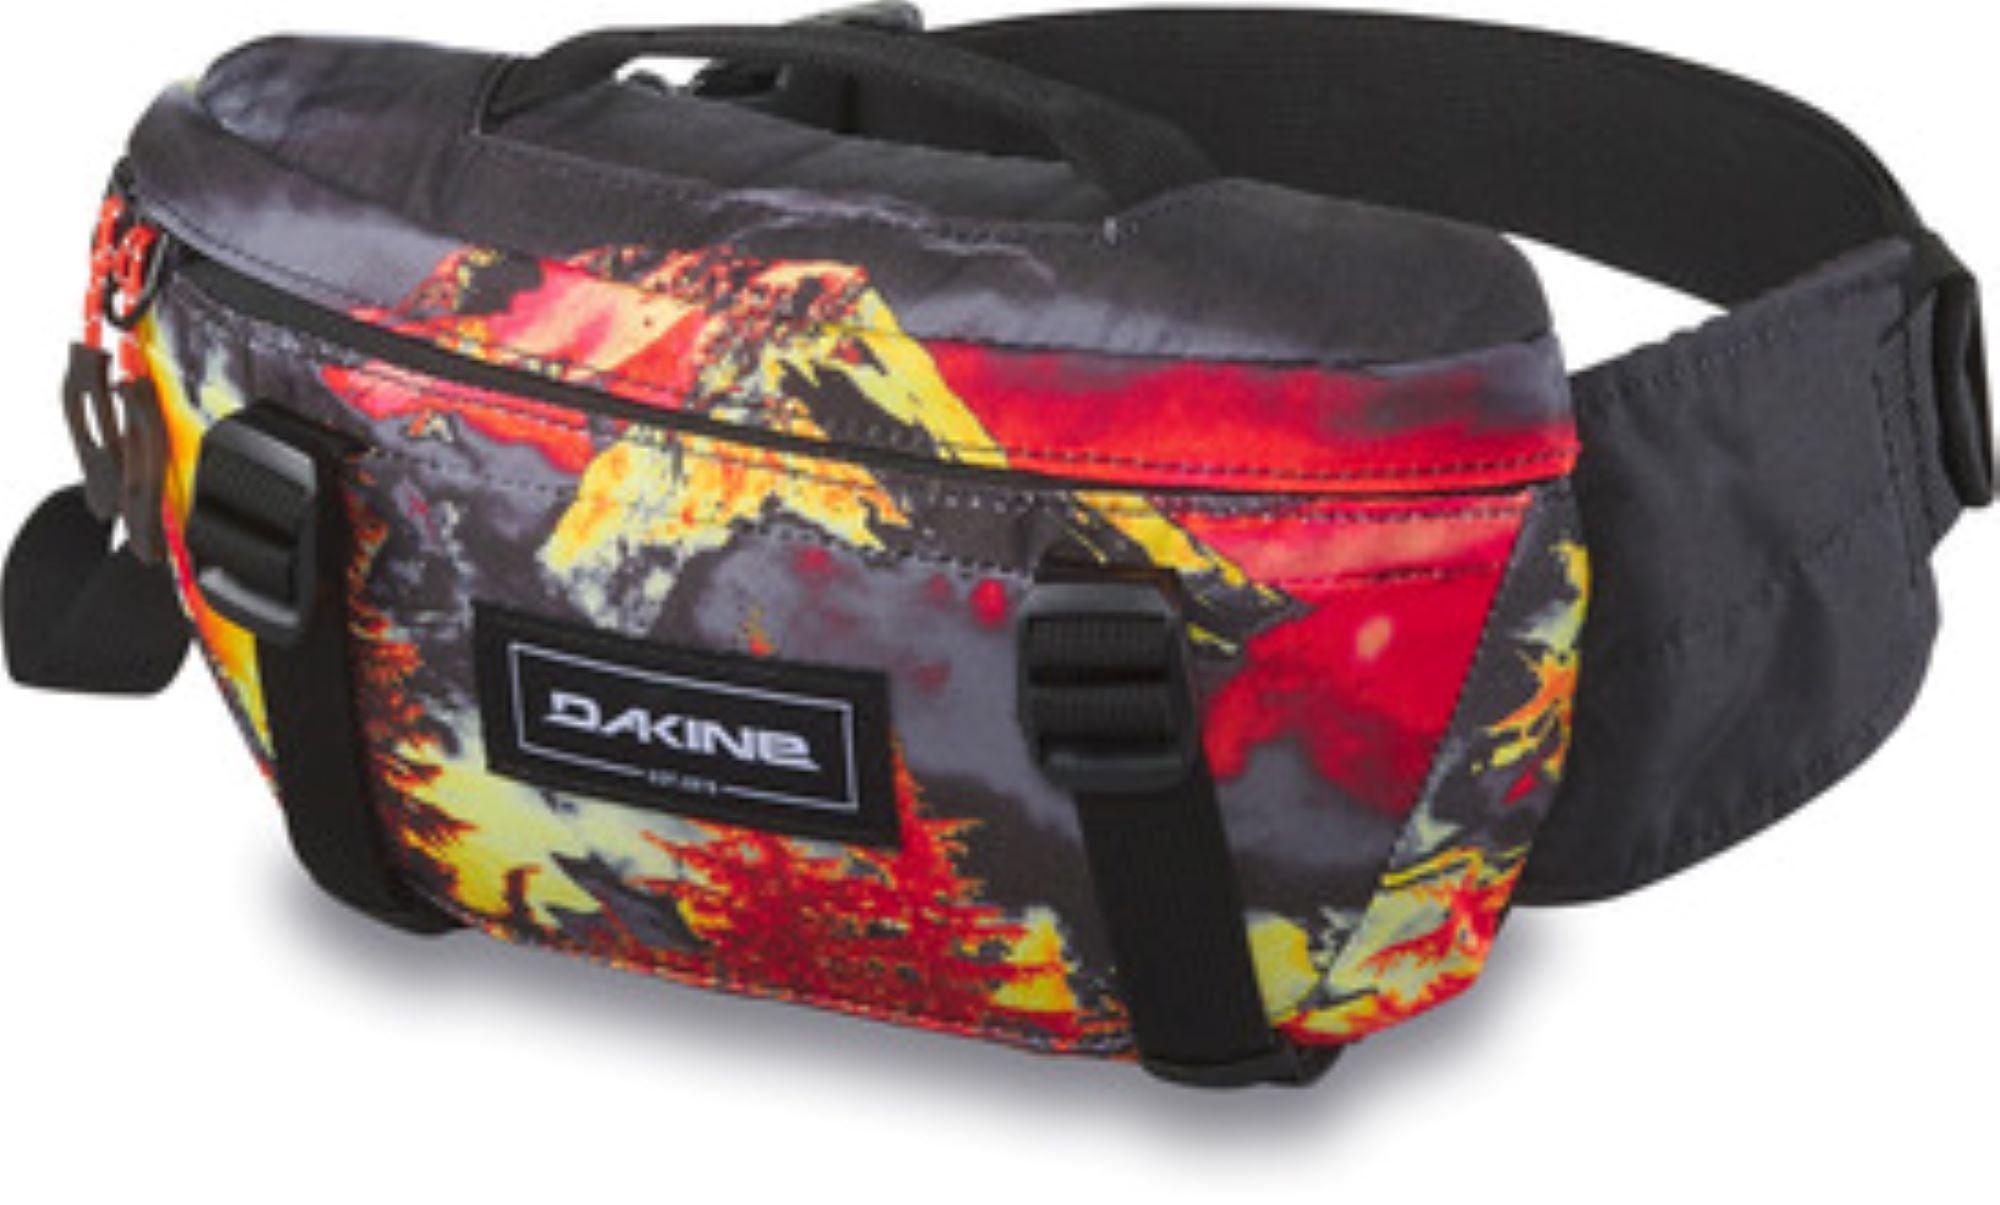 Dakine Hot Laps Bag 1L